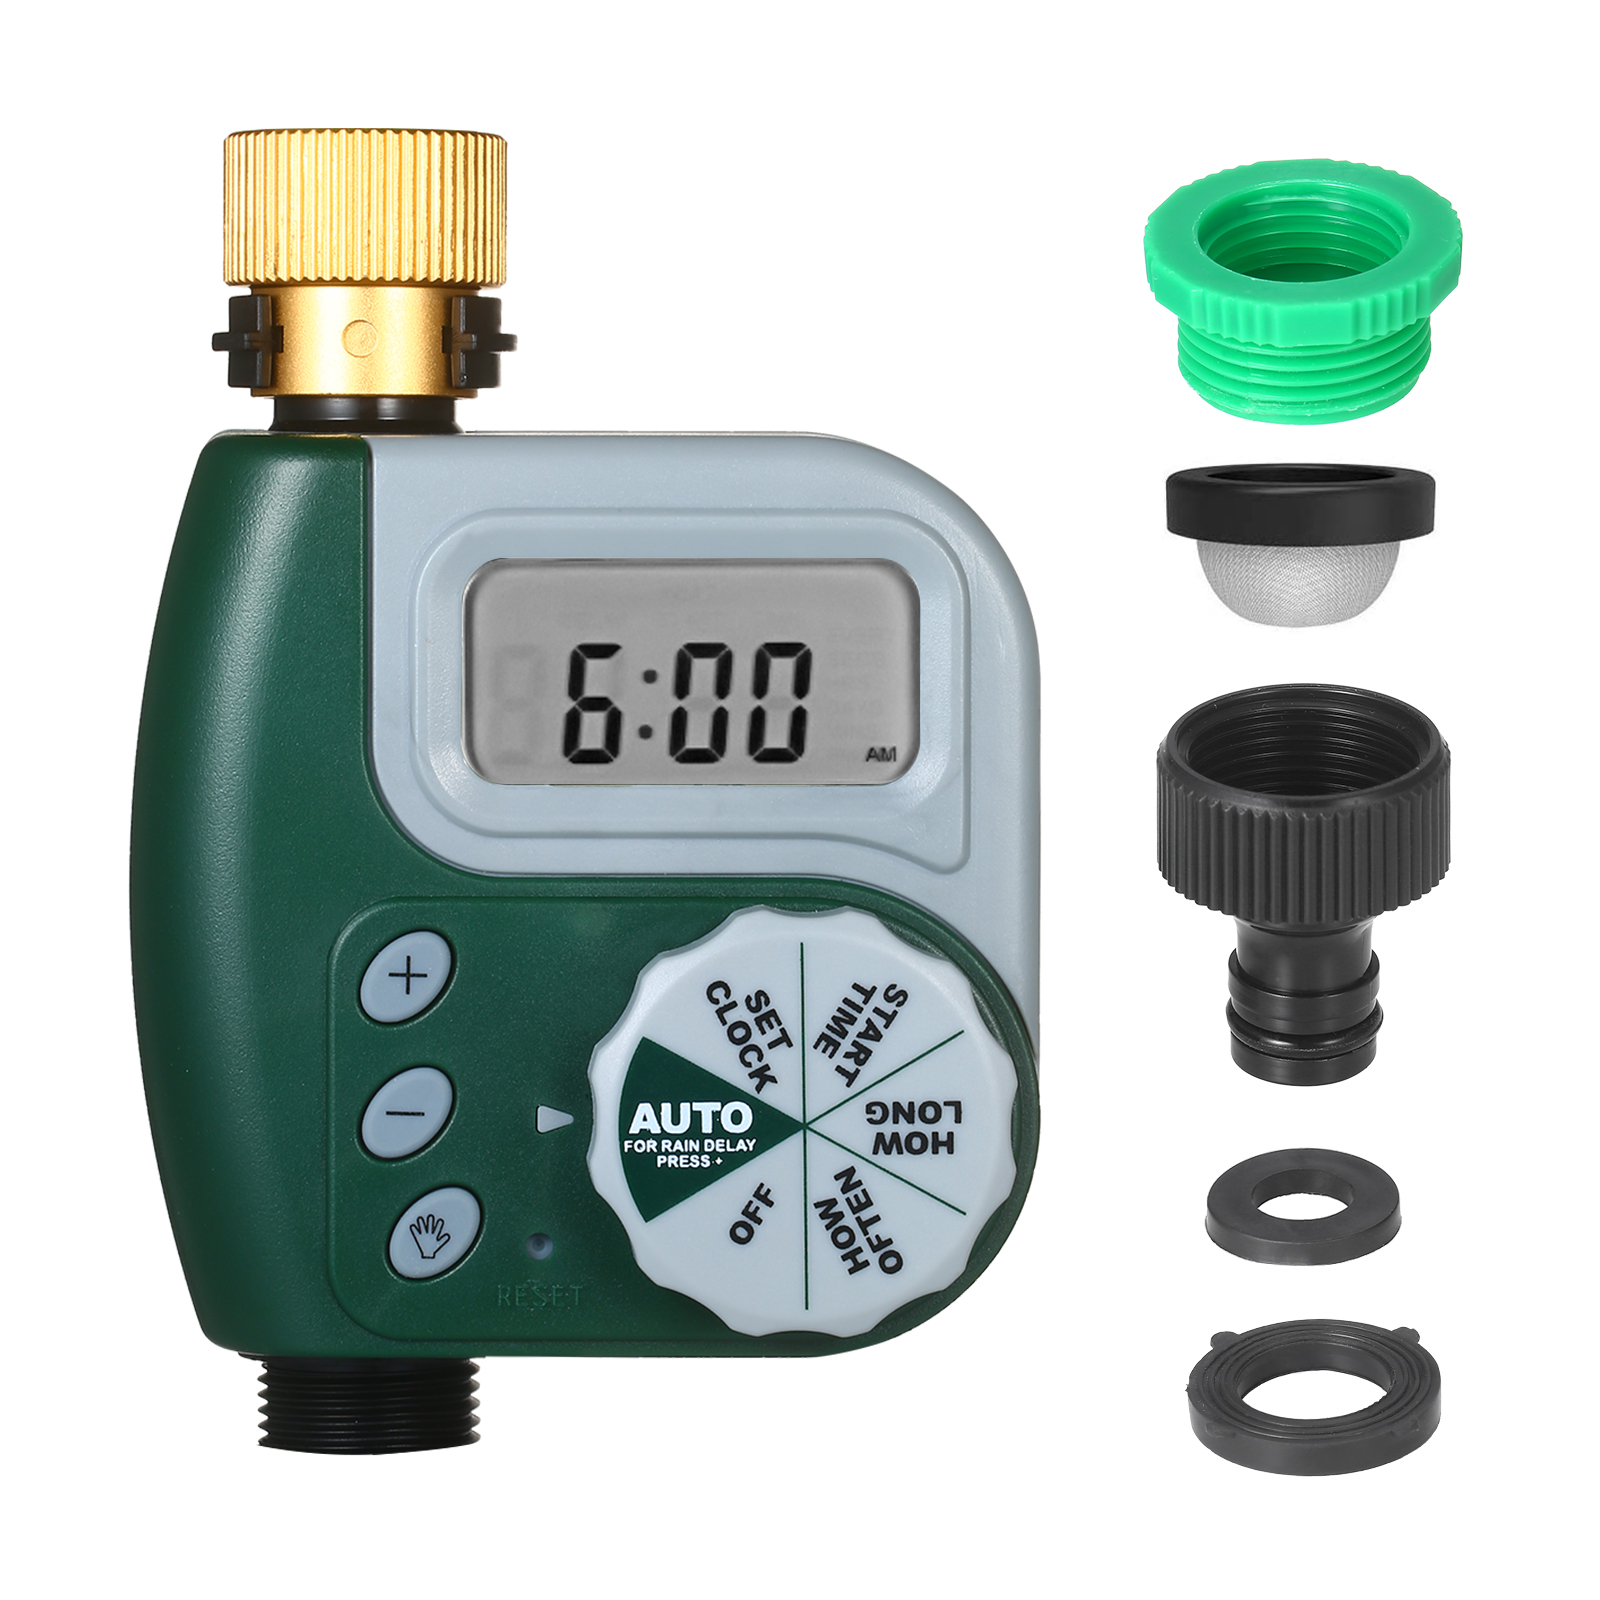 US/EU/UK Plug Digital Programmable Water Timer Weatherproof Garden Lawn Faucet Hose Timer Automatic Irrigation Controller